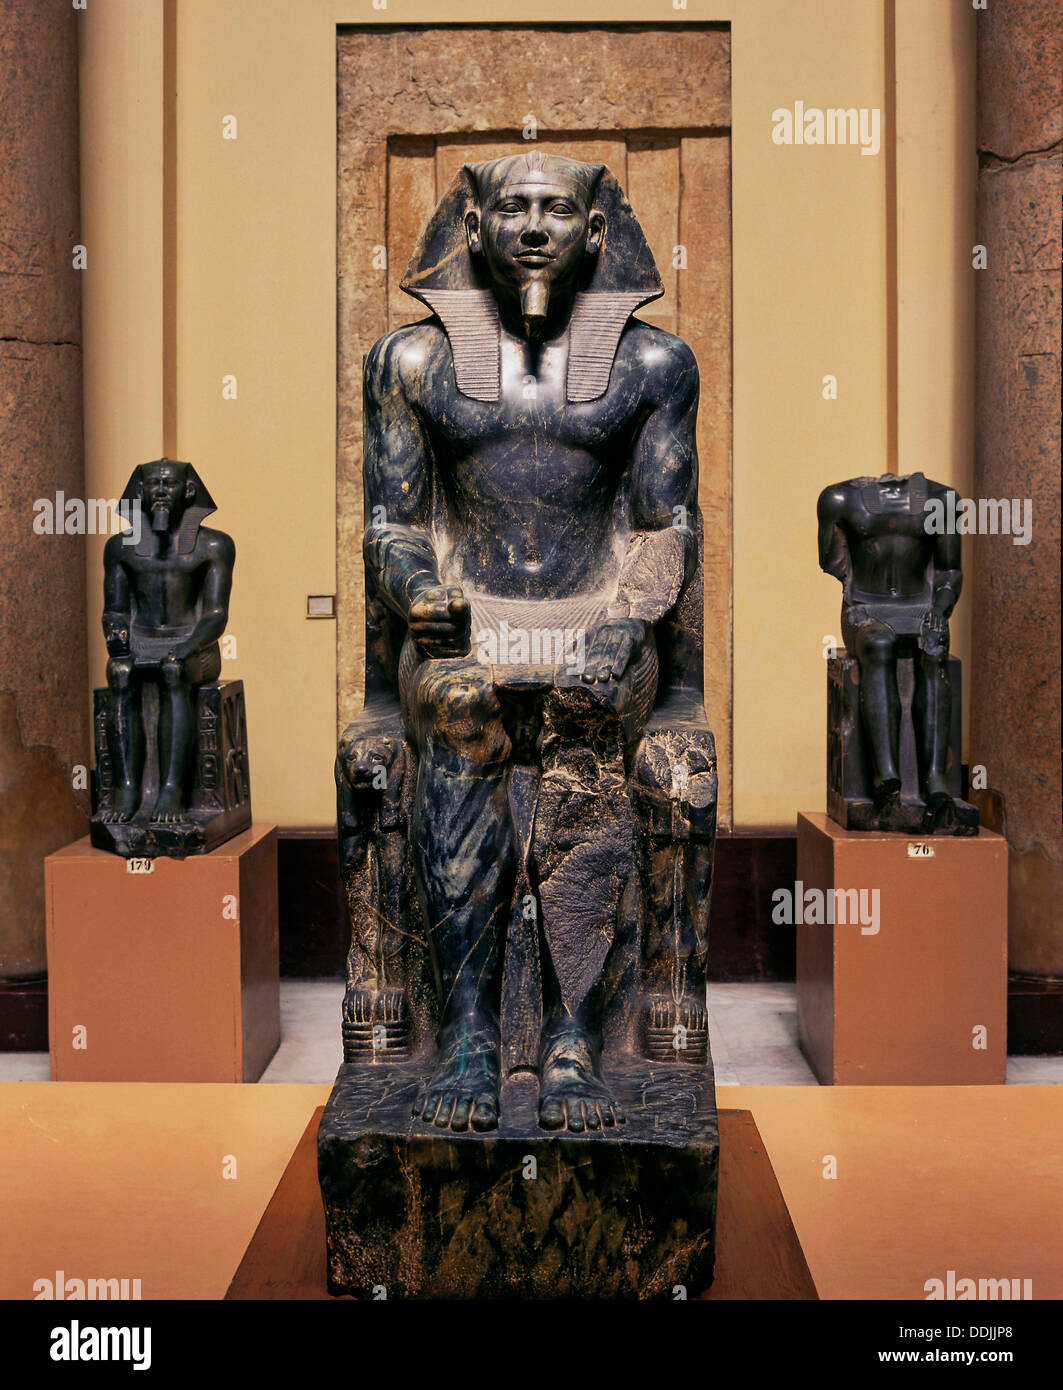 Diorite statue of Pharaoh Khafre - 26th century BC, Museum of Egyptian Antiquities, Cairo, Egypt, Africa Stock Photo